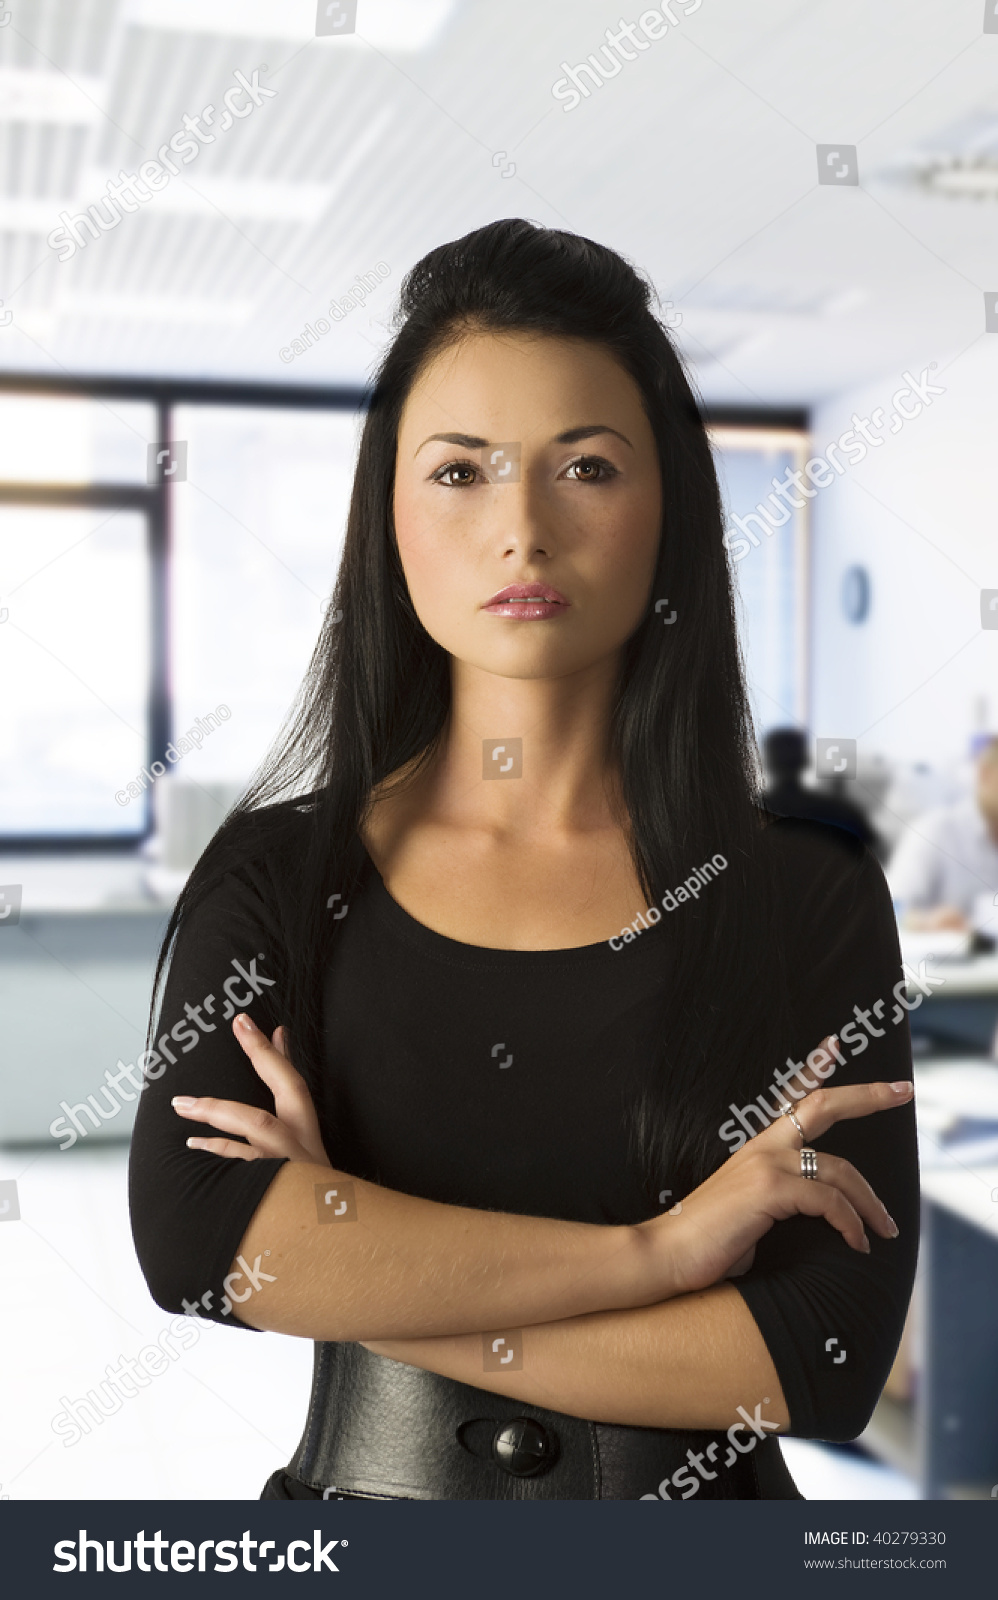 Graceful Asian Girl Office Worker In Black Dress With Dark Hair Stock ...